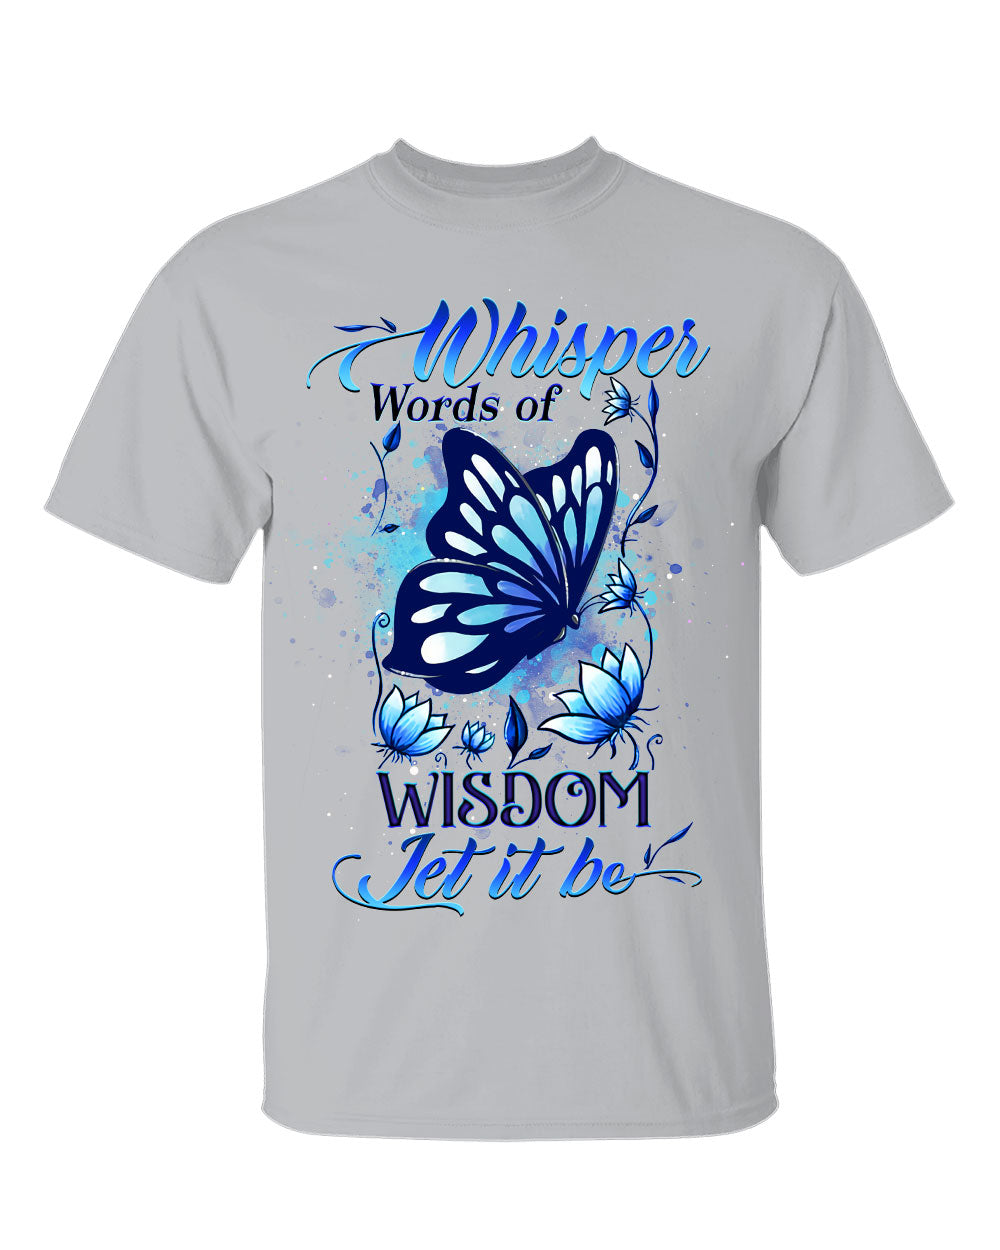 WHISPER WORDS OF WISDOM COTTON SHIRT - YHDU1905232